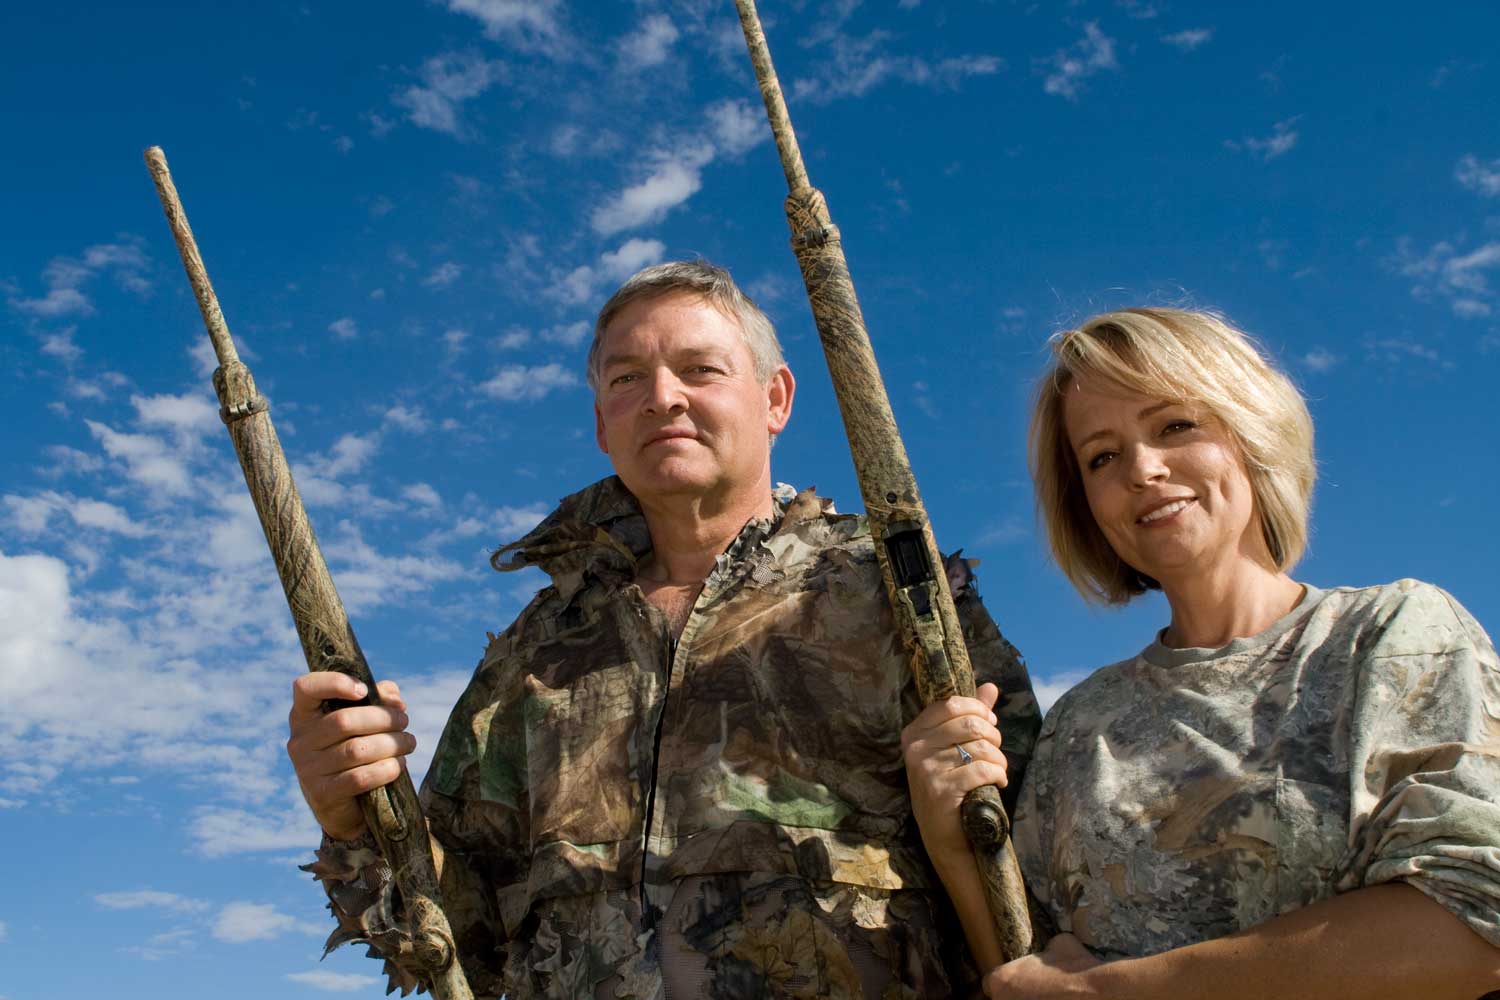 couple with shotguns